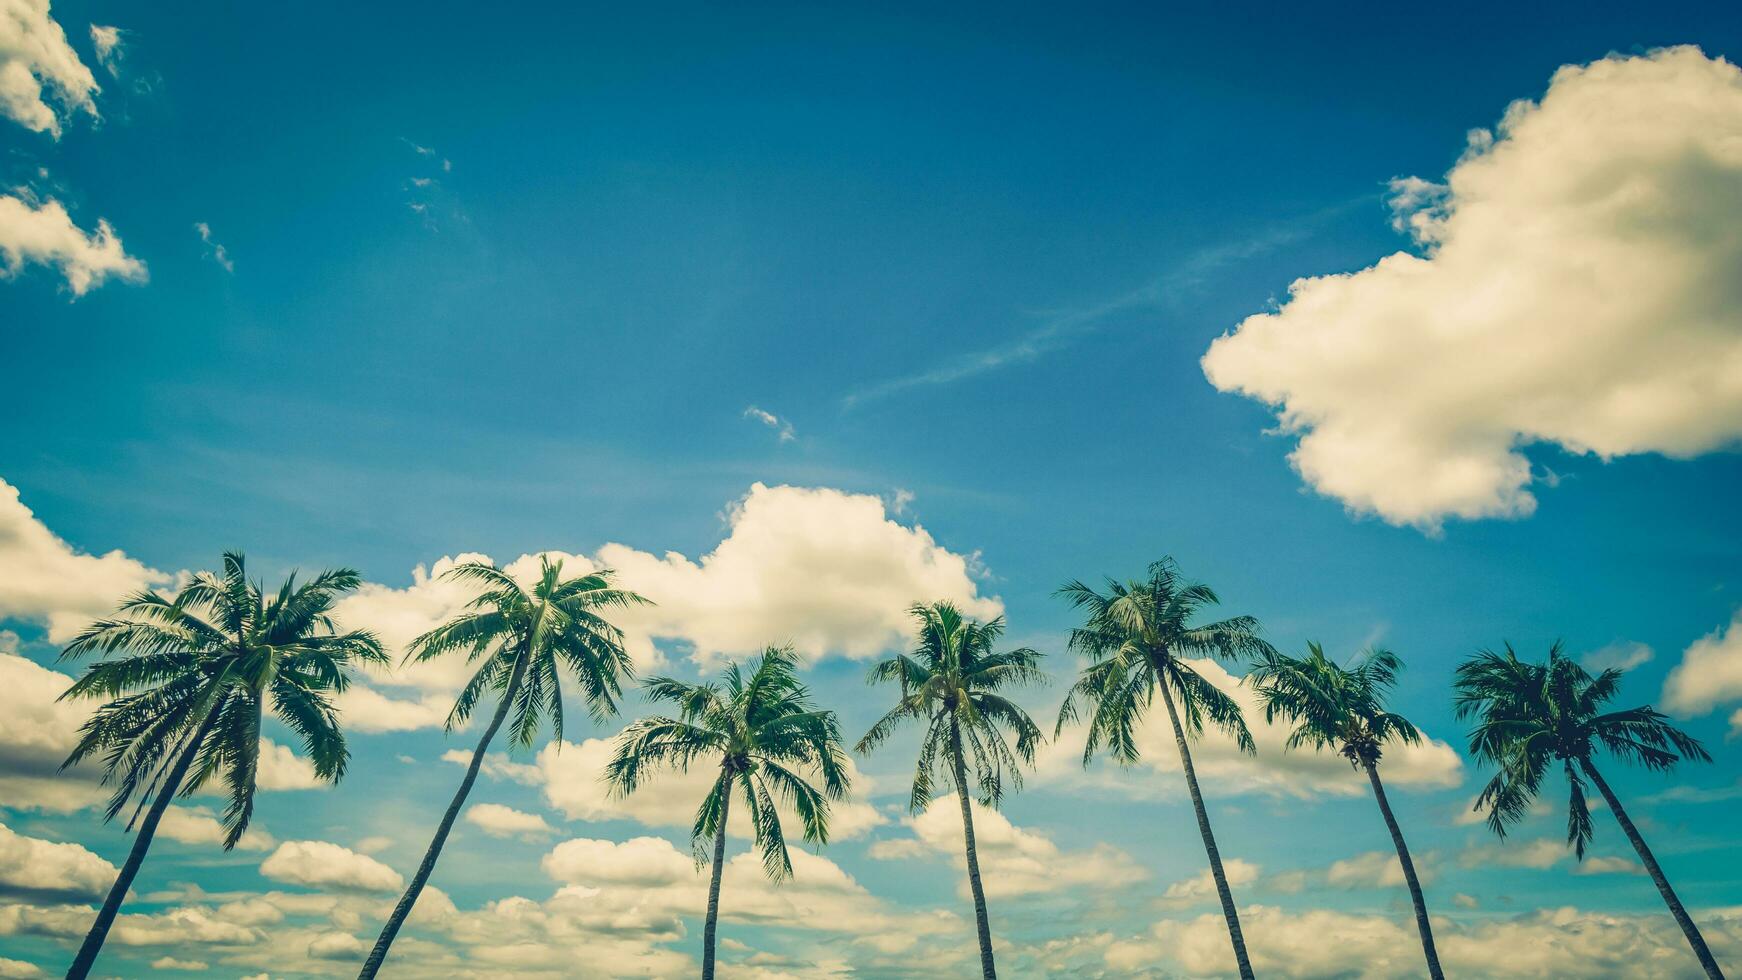 Coco palma árbol en azul cielo antecedentes con Clásico tonificado foto